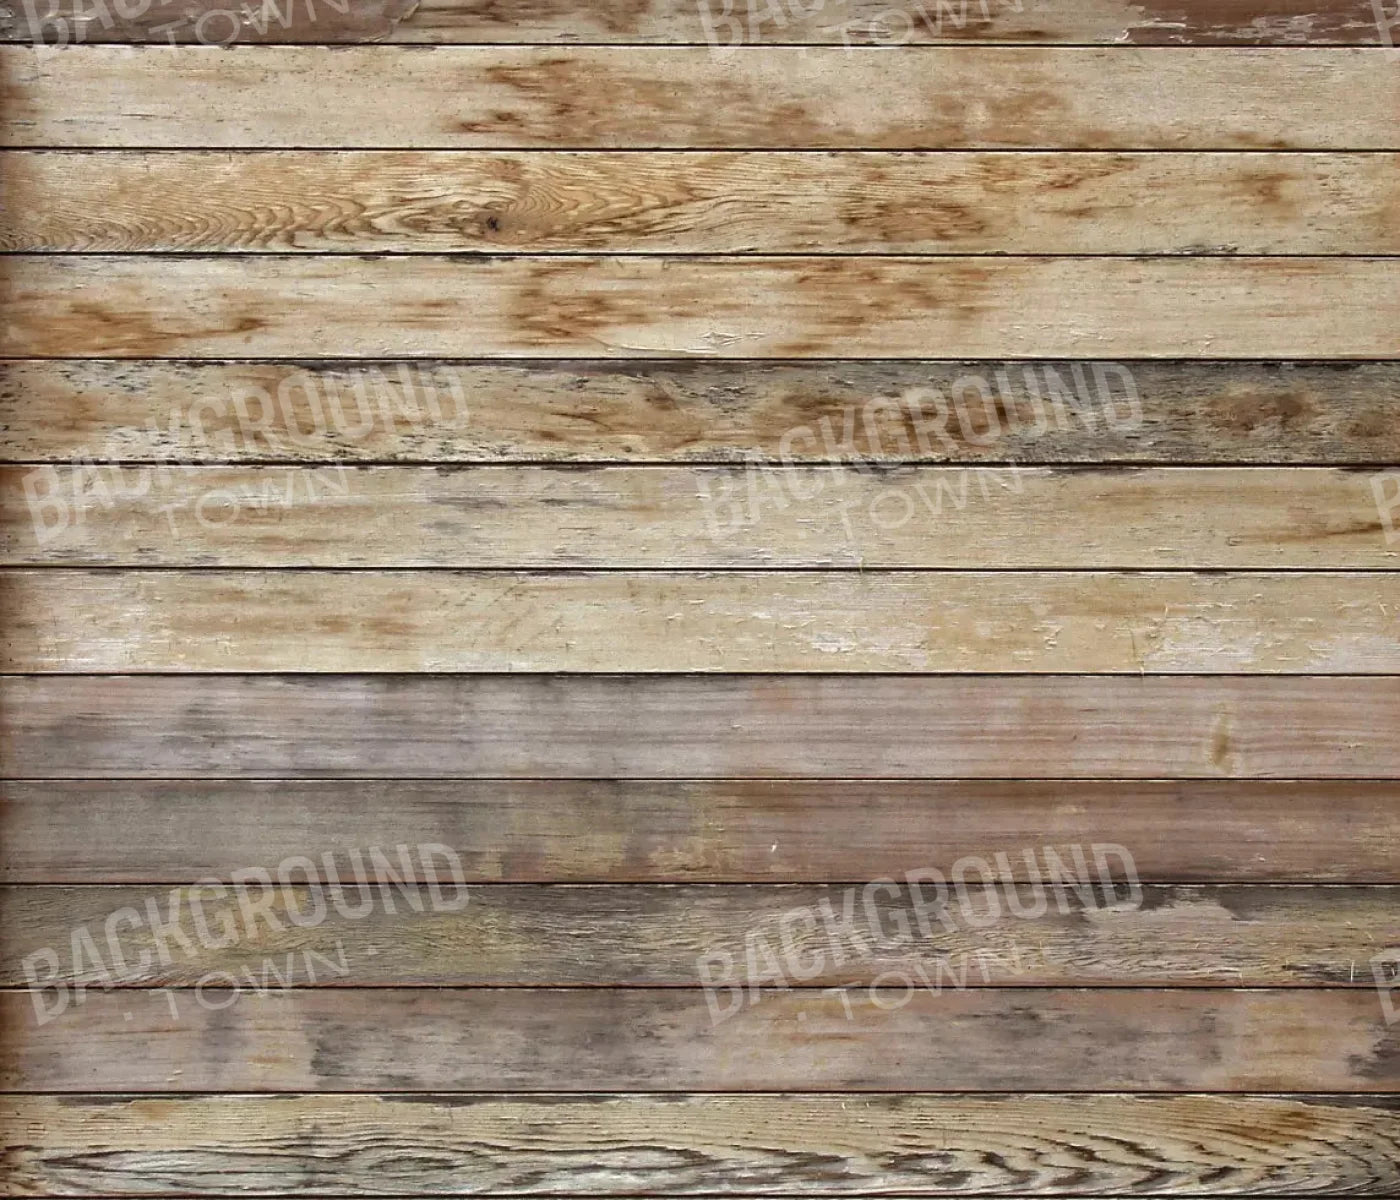 Board 12X10 Ultracloth ( 144 X 120 Inch ) Backdrop